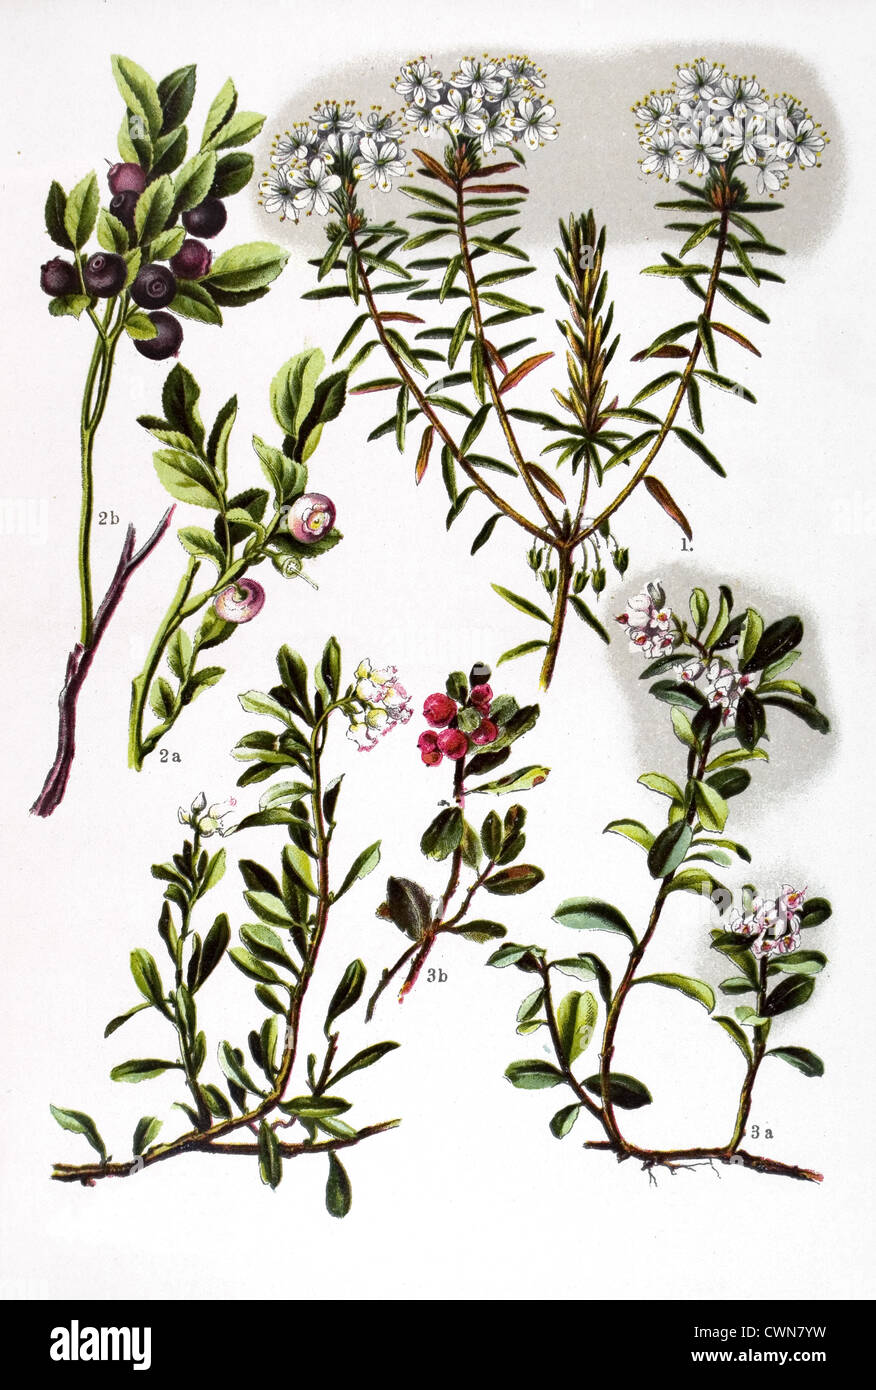 Labrador tea and other herbs Stock Photo